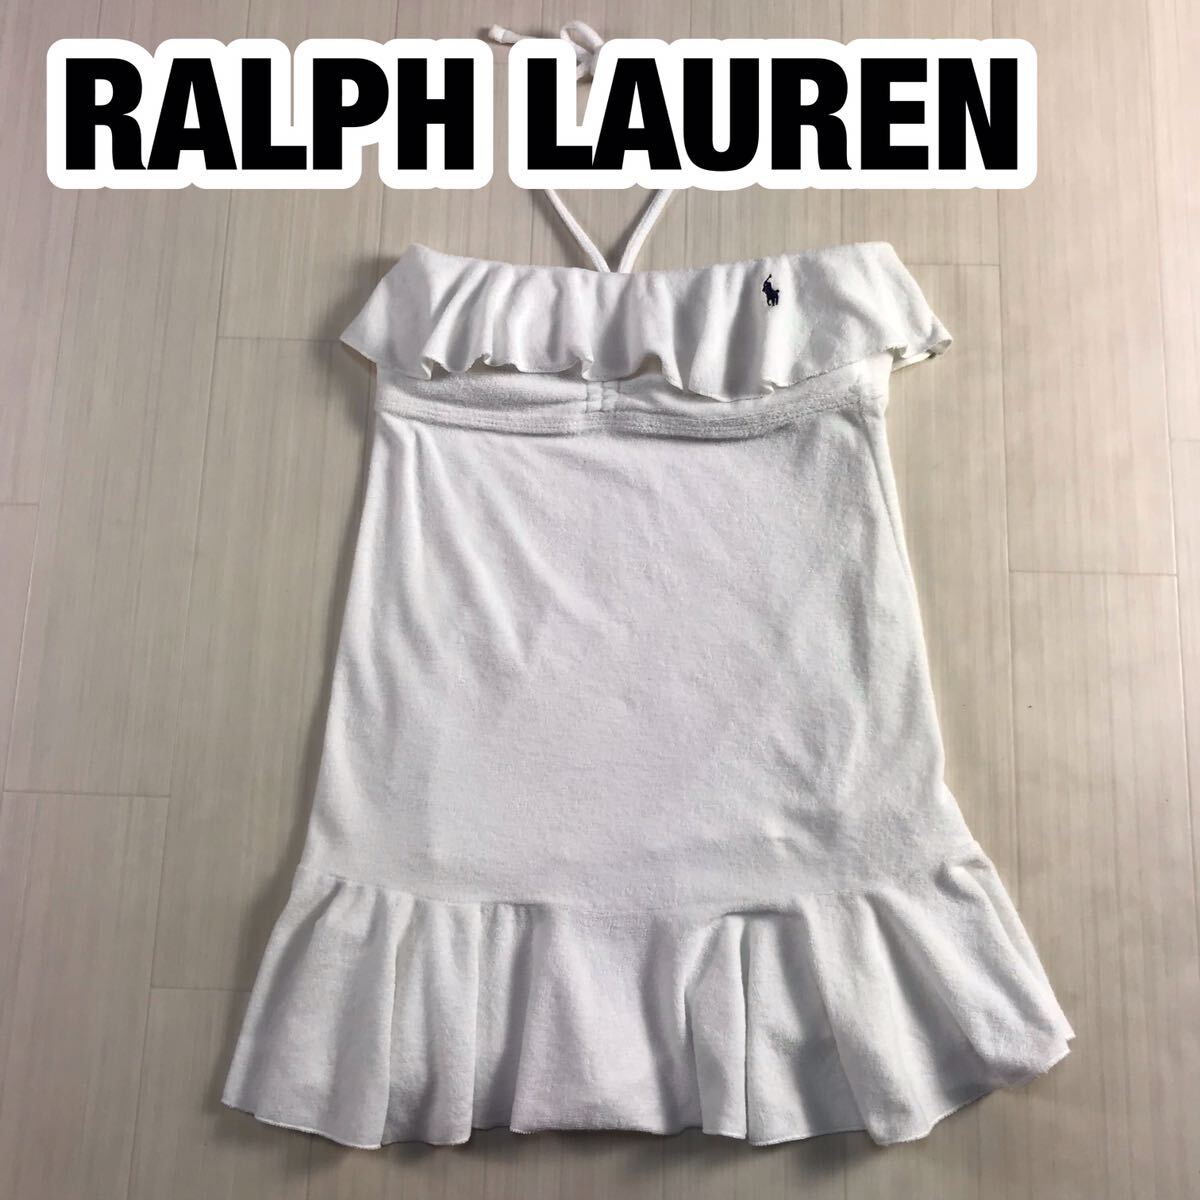 RALPH LAUREN Ralph Lauren топ One-piece Home одежда грудь накладка есть S белый 